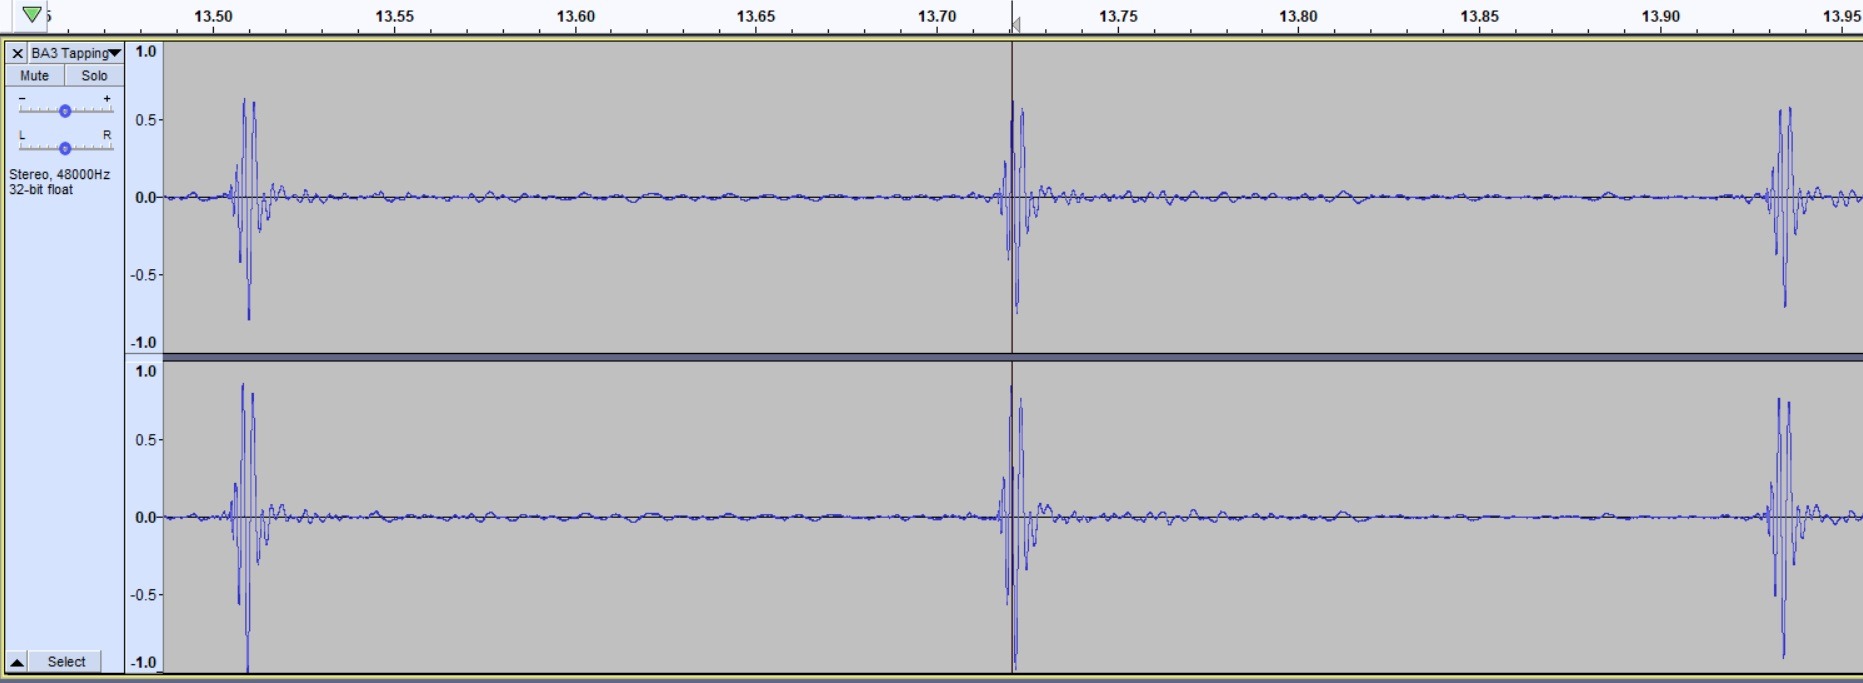 BA3-SLB-Tapping-Waveform-3-pulses.jpg